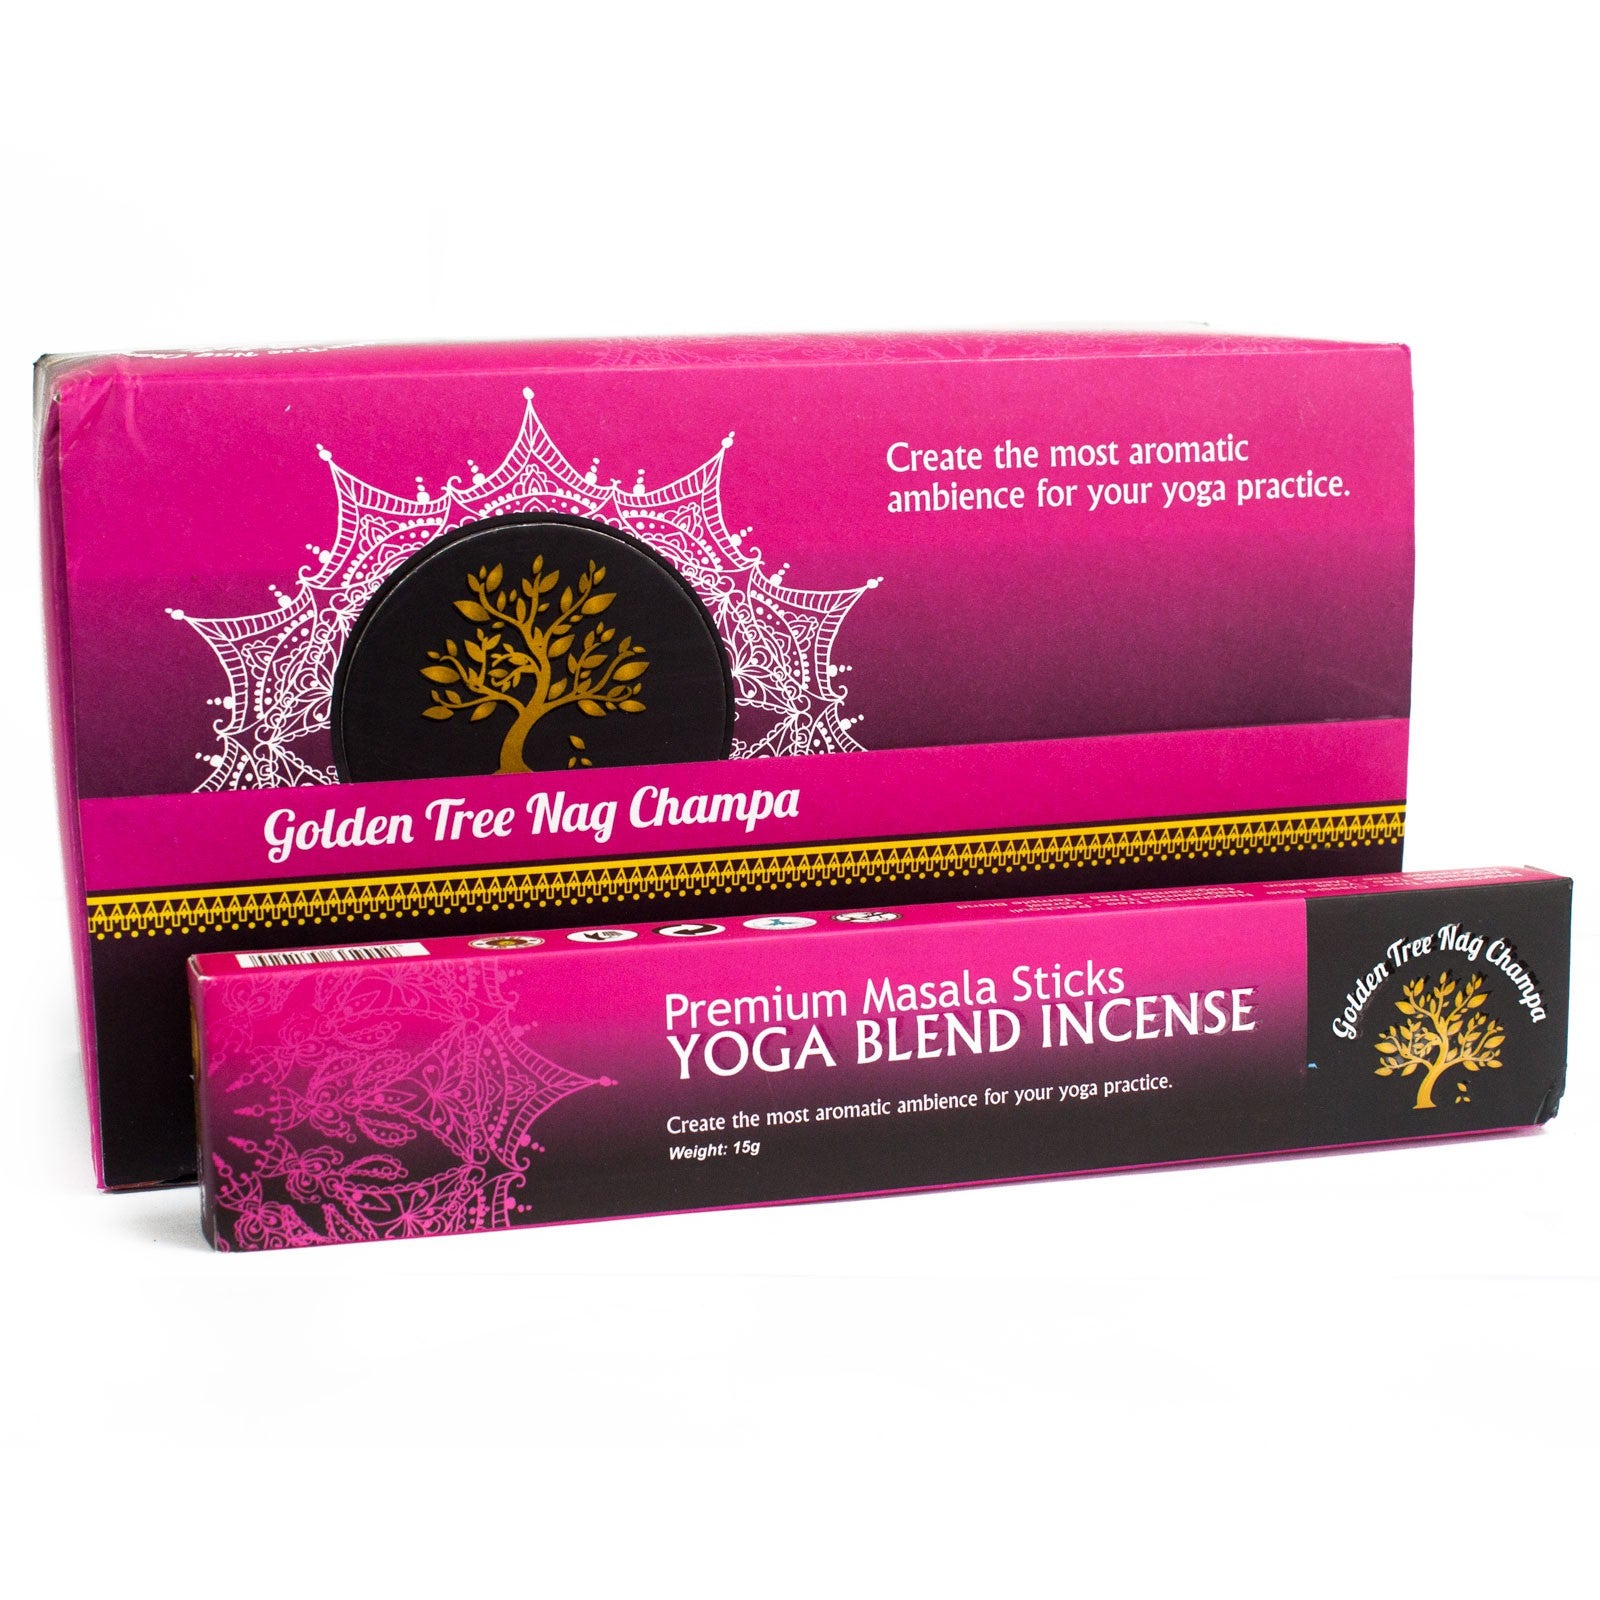 View Golden Tree Nag Champa Incense Yoga Blend information